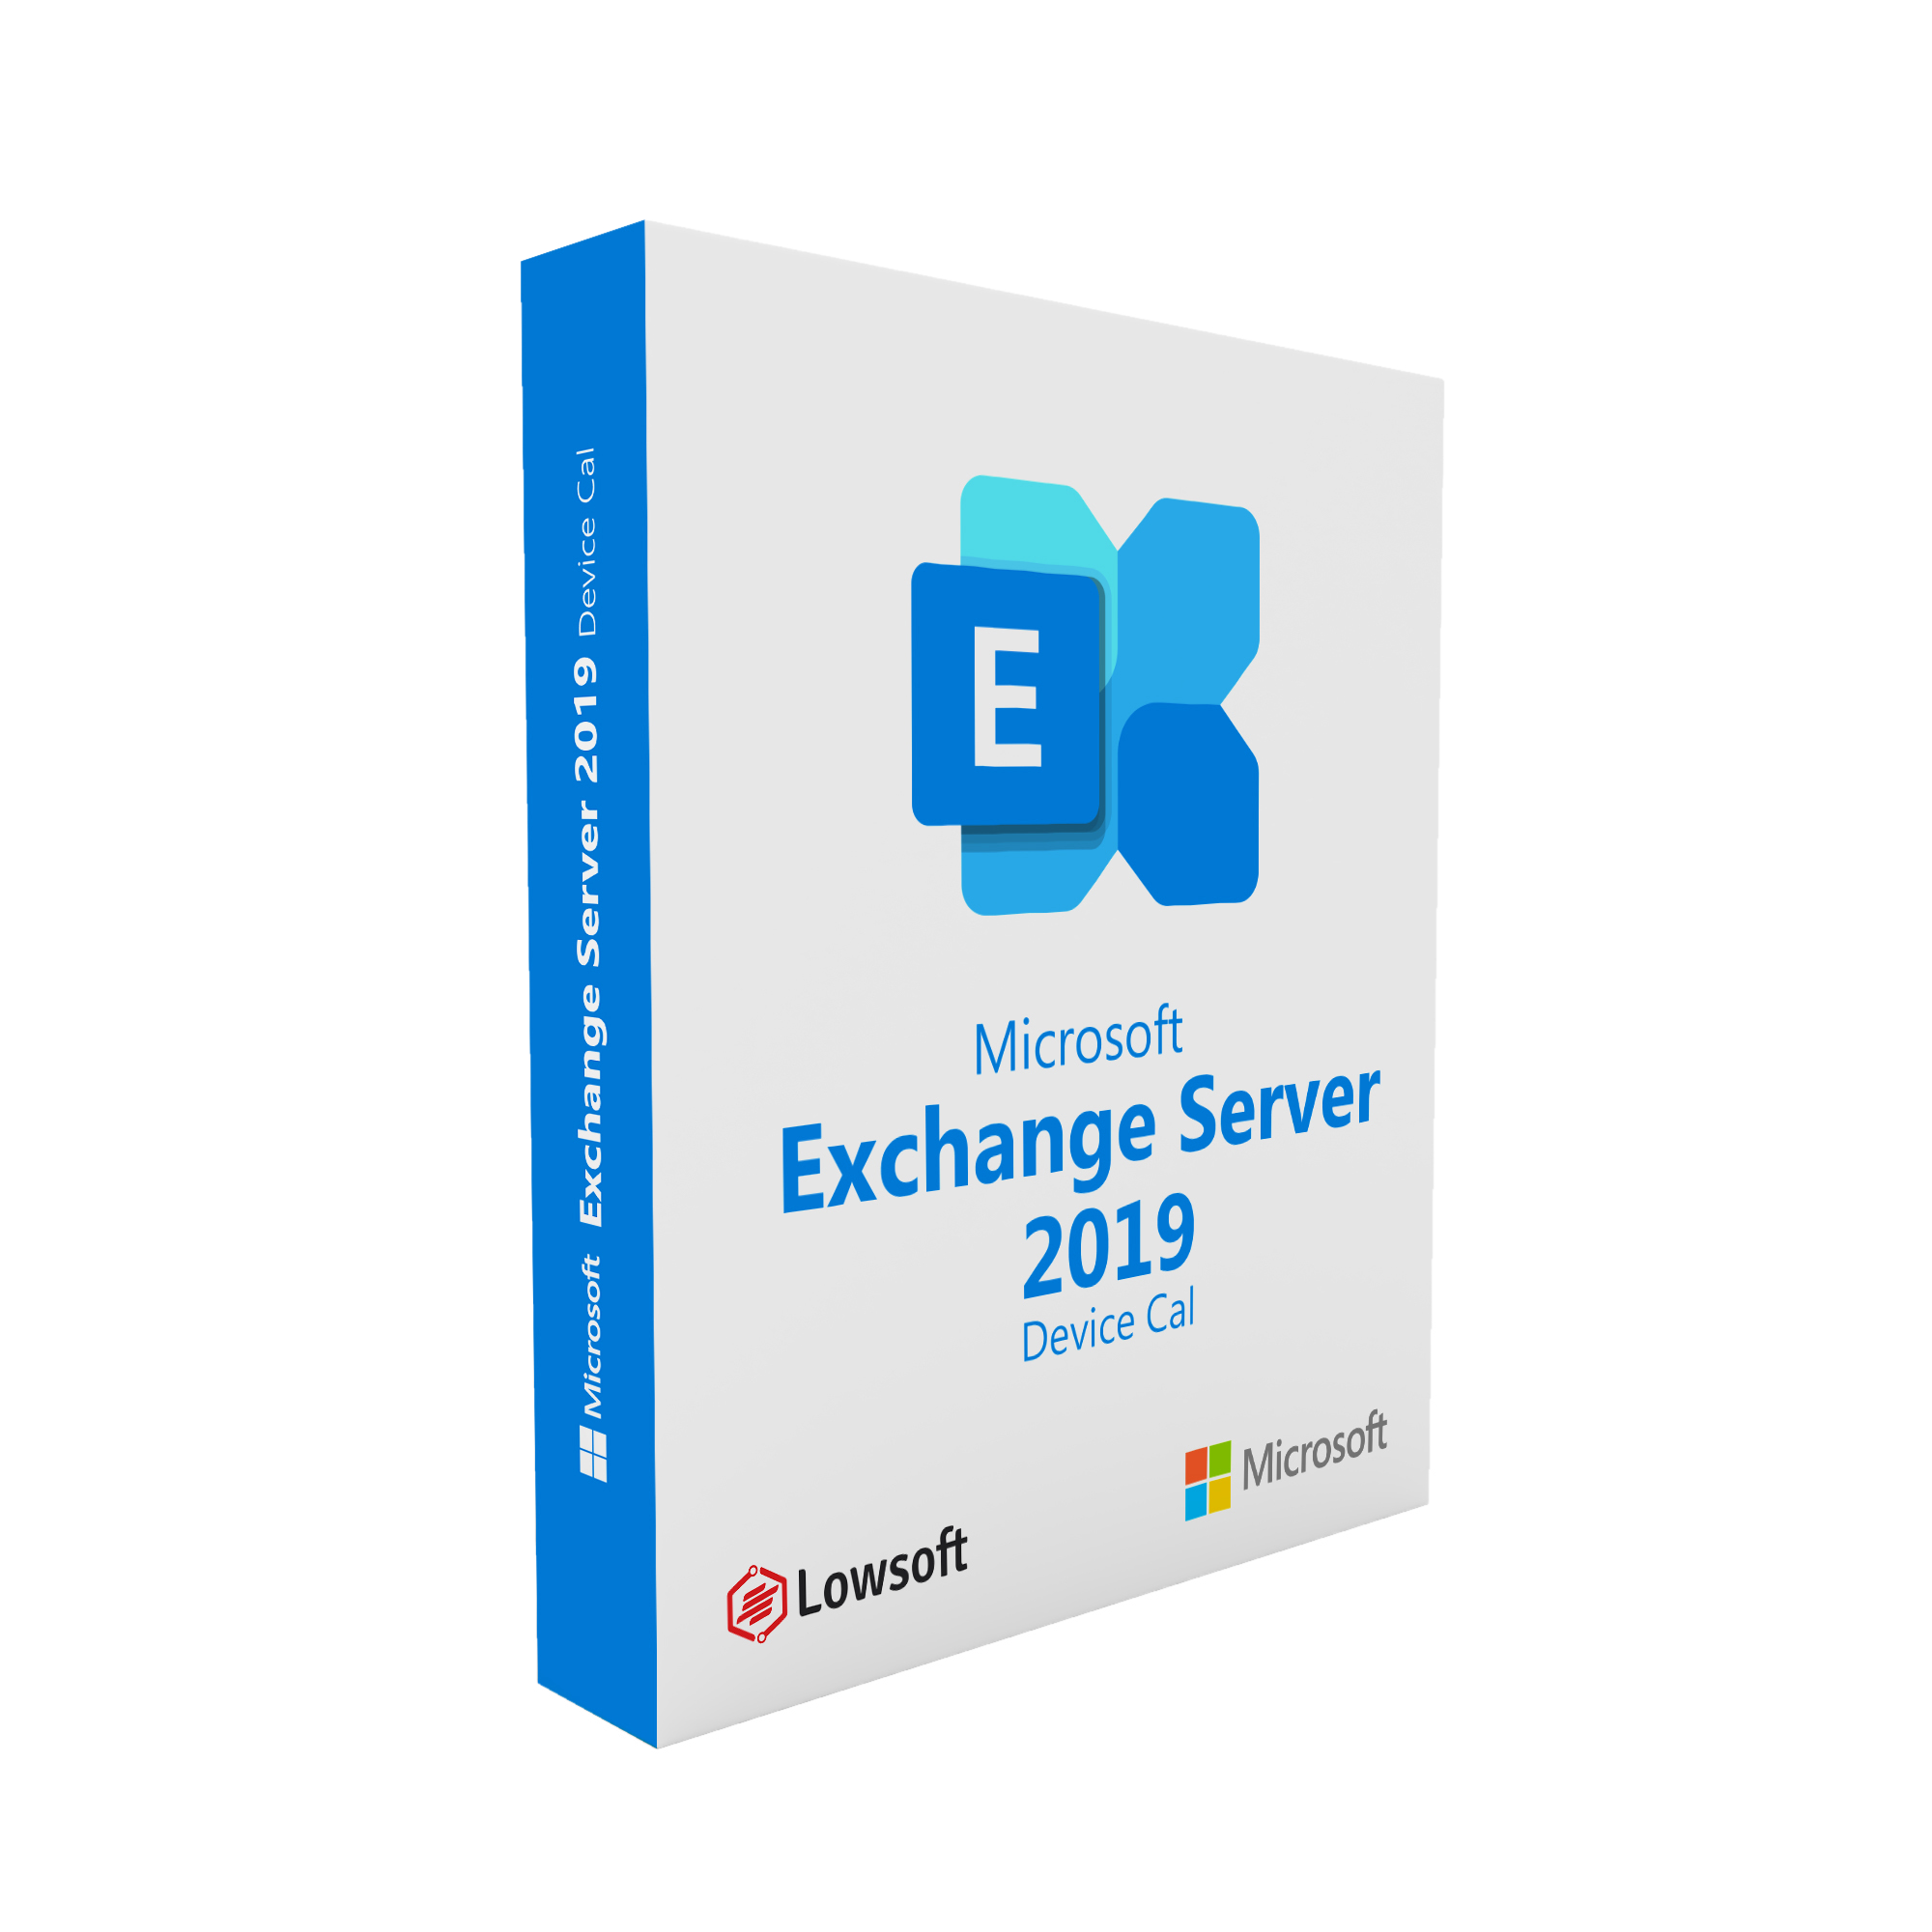 Exchange Server 2019 Device CAL